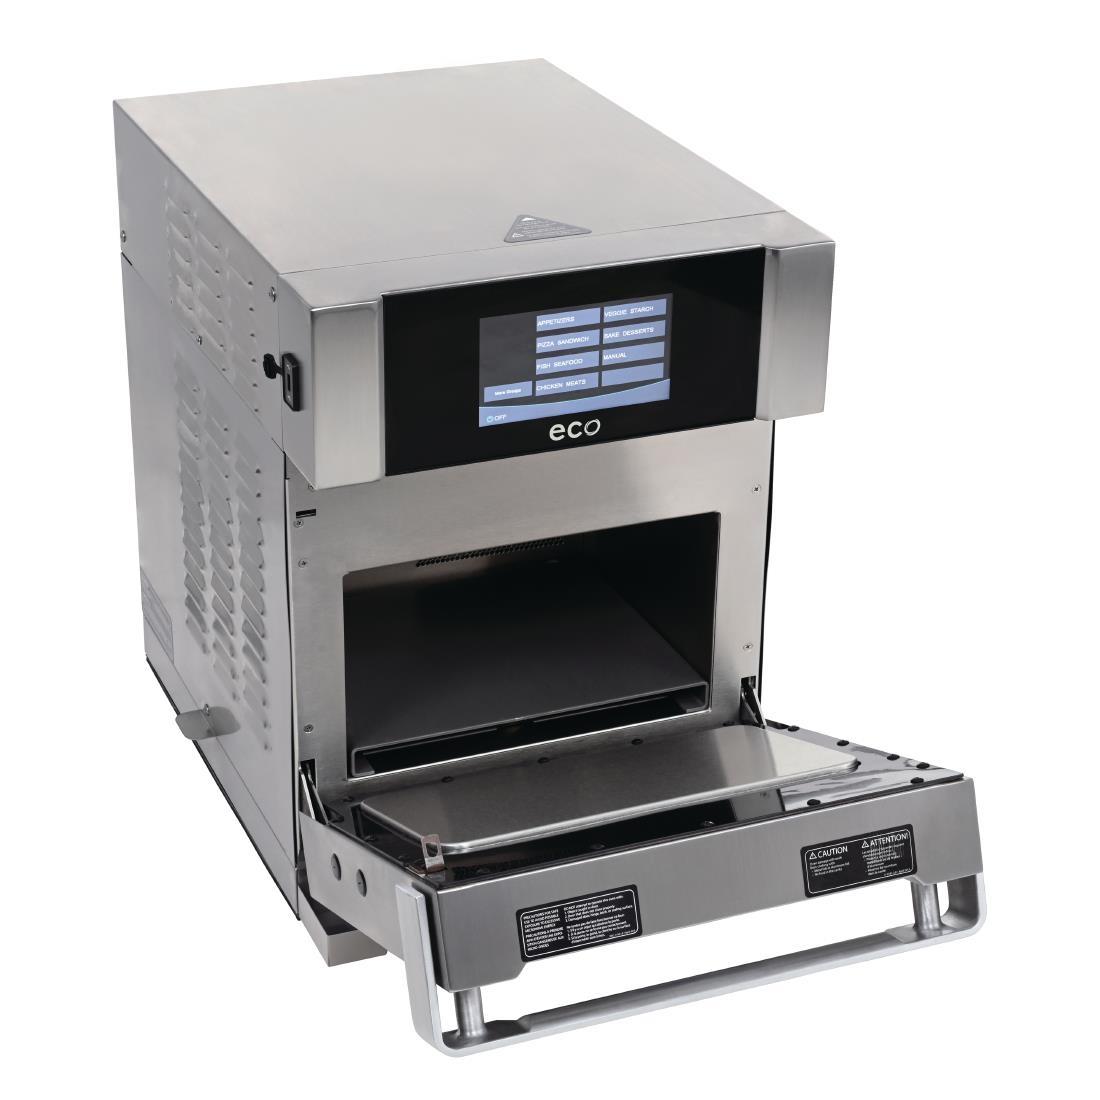 Turbochef Eco Rapid Cook Oven ECO-9500-13 Silver - DE309  - 4